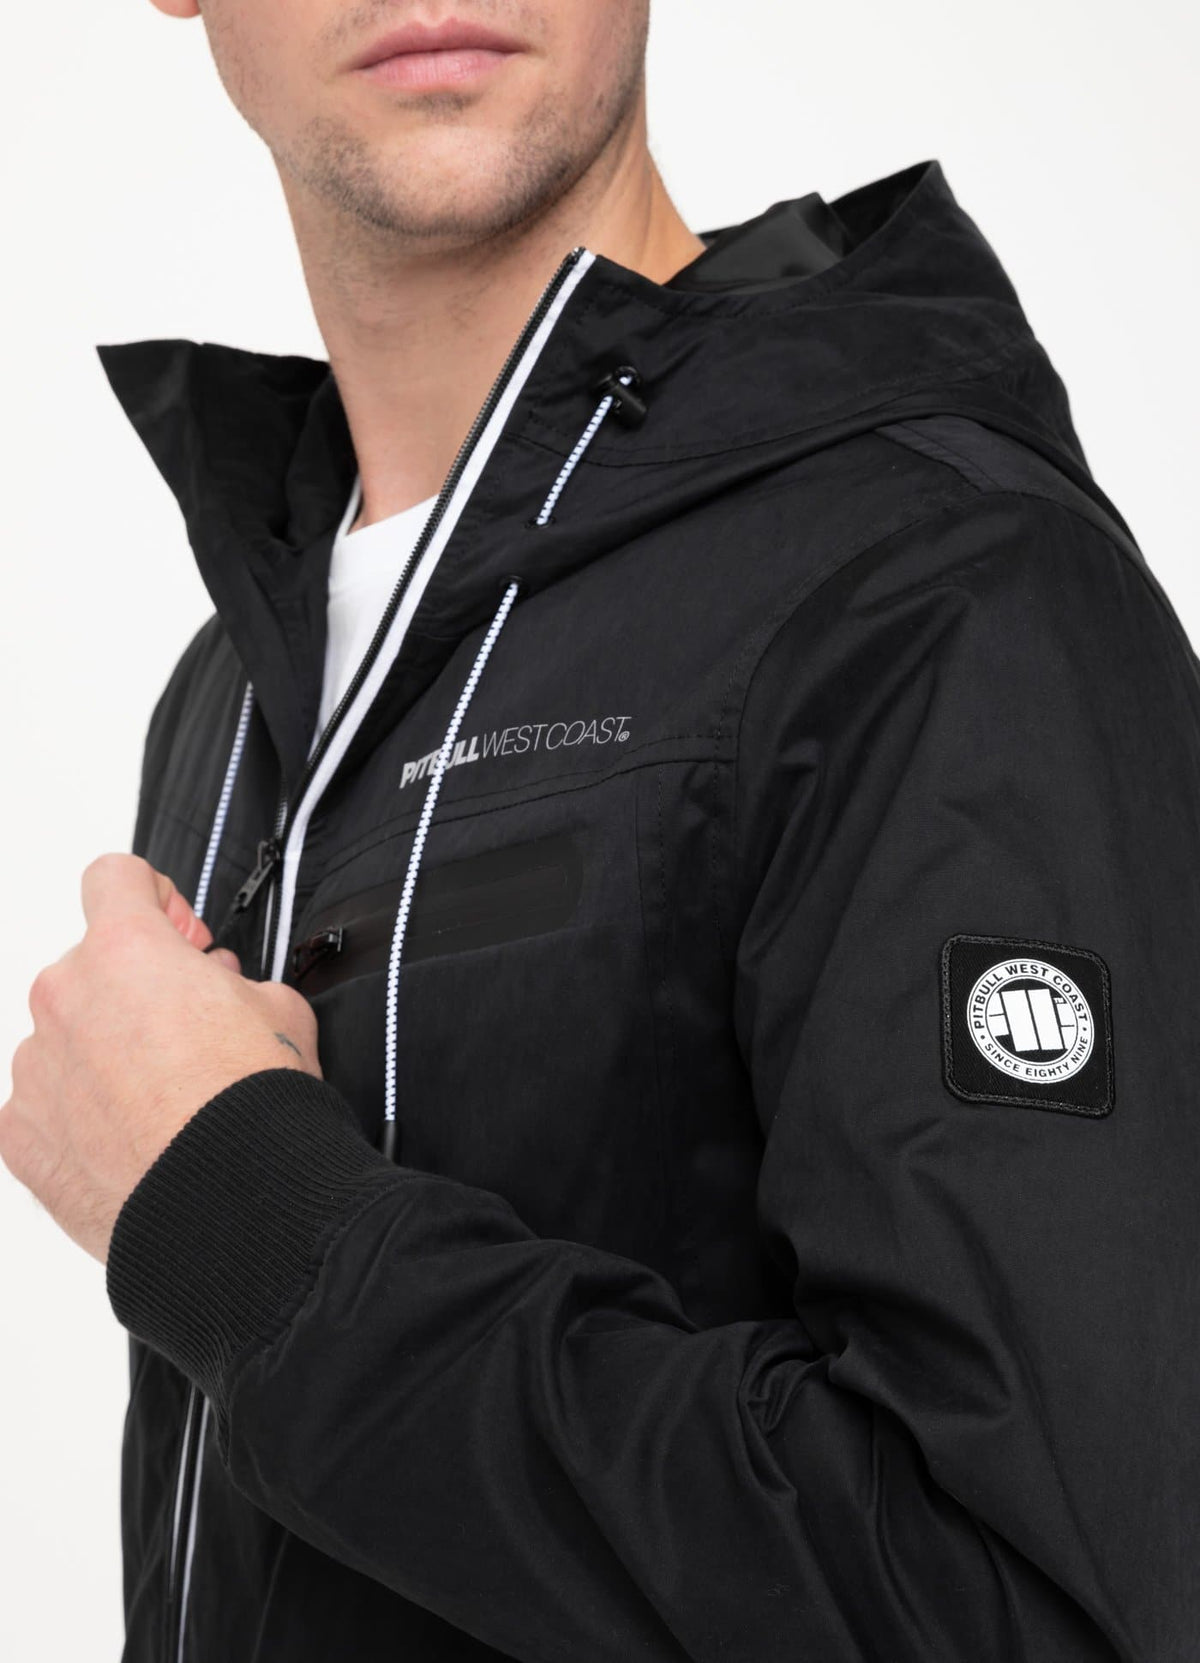 GROTON Hooded Jacket 2020 Black - Pitbull West Coast International Store 